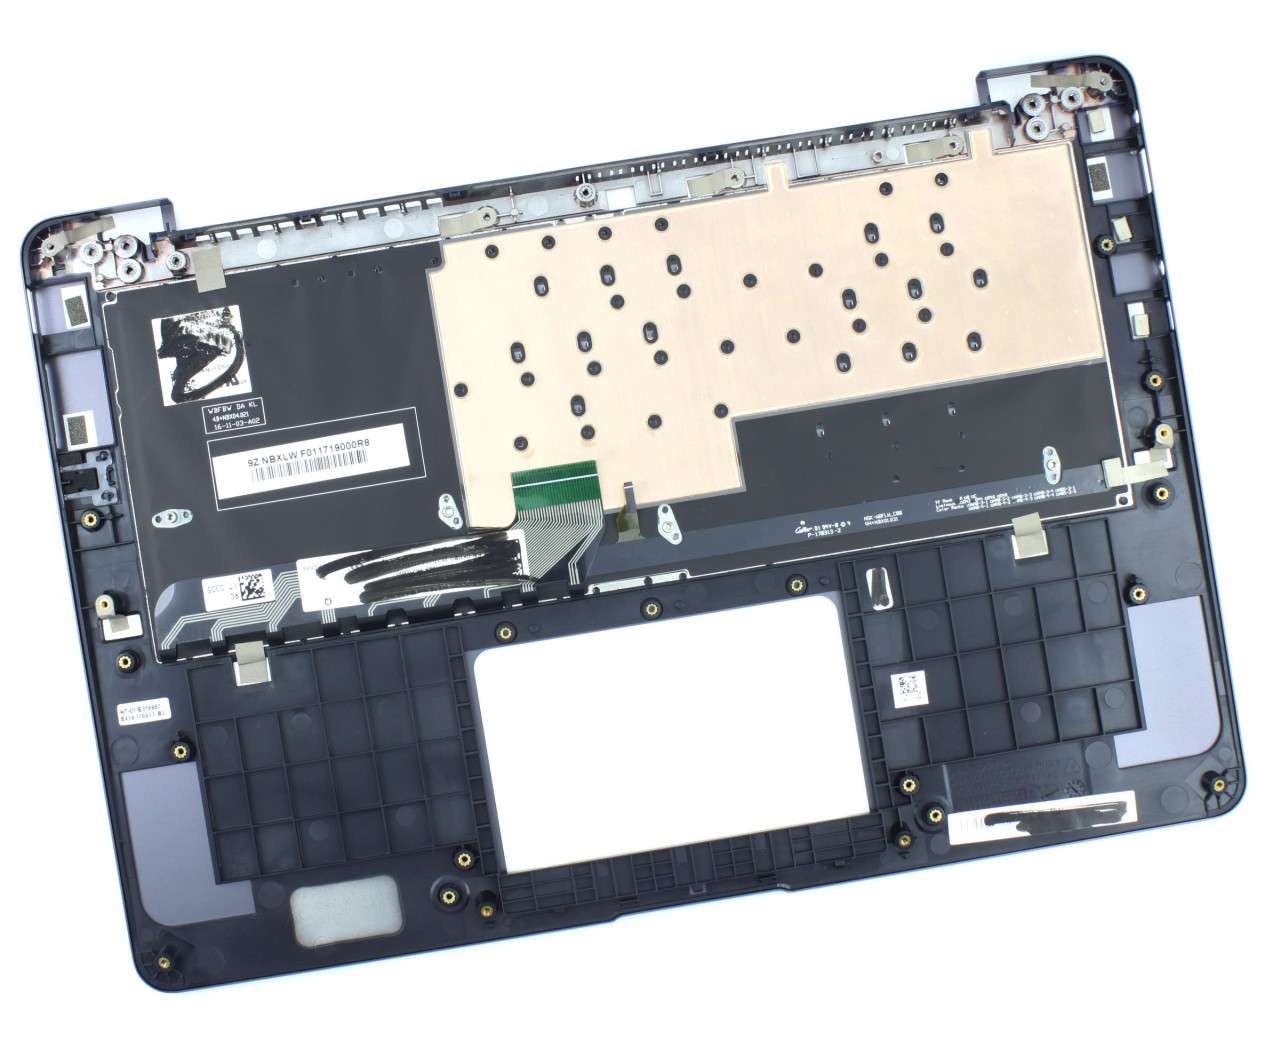 Tastatura Asus ZenBook UX3400UN Neagra cu Palmrest Gri iluminata backlit